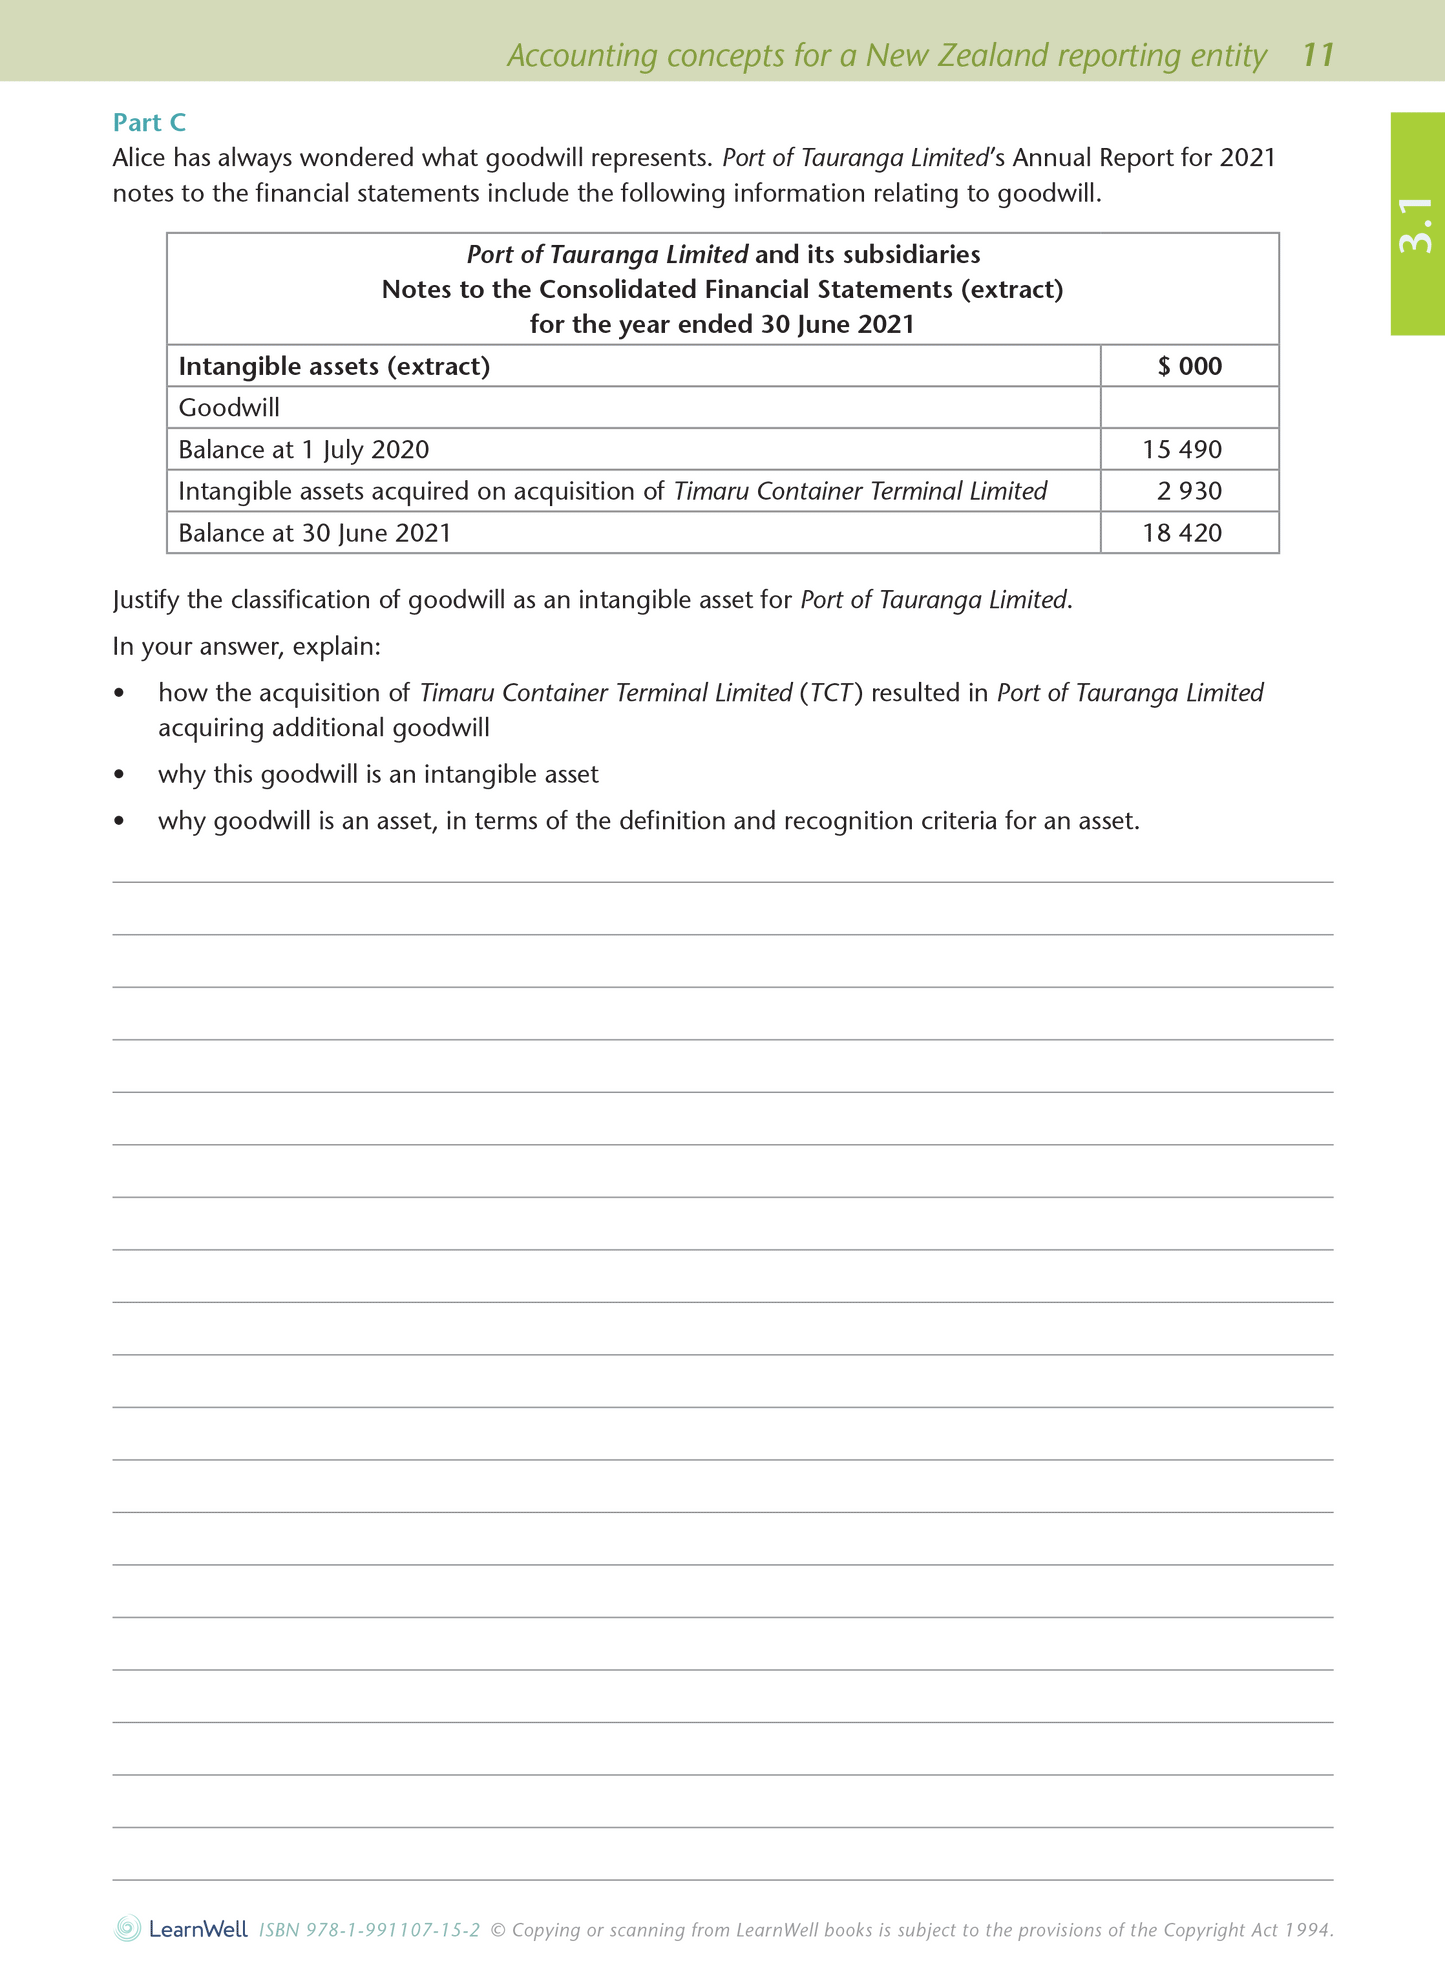 Level 3 Accounting AME Workbook